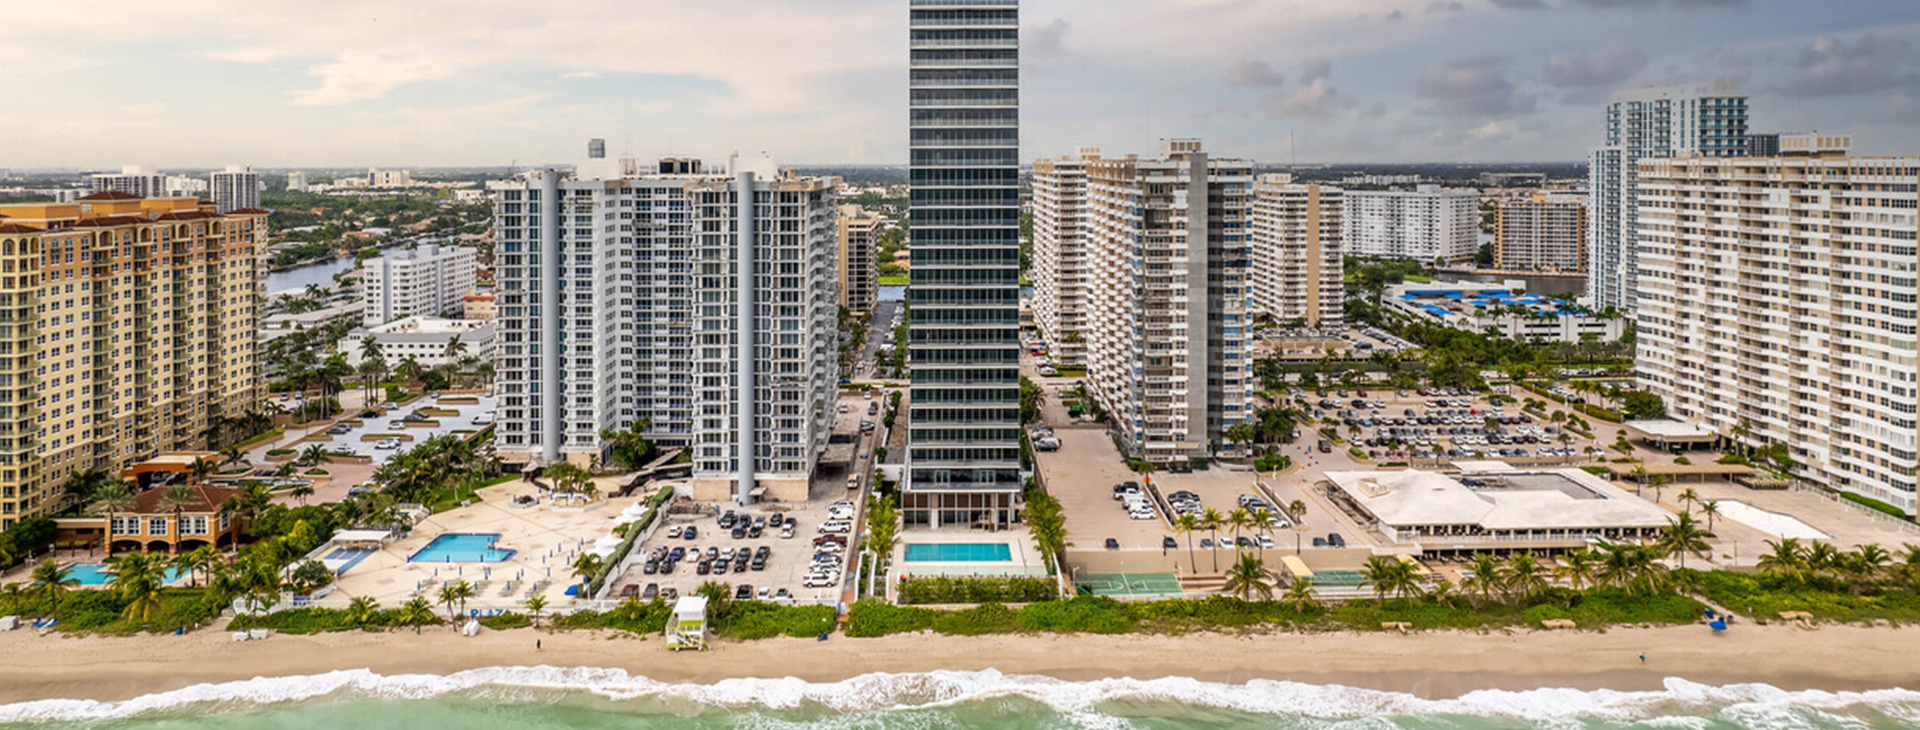 2000 Ocean Condominium by Holland Engineering